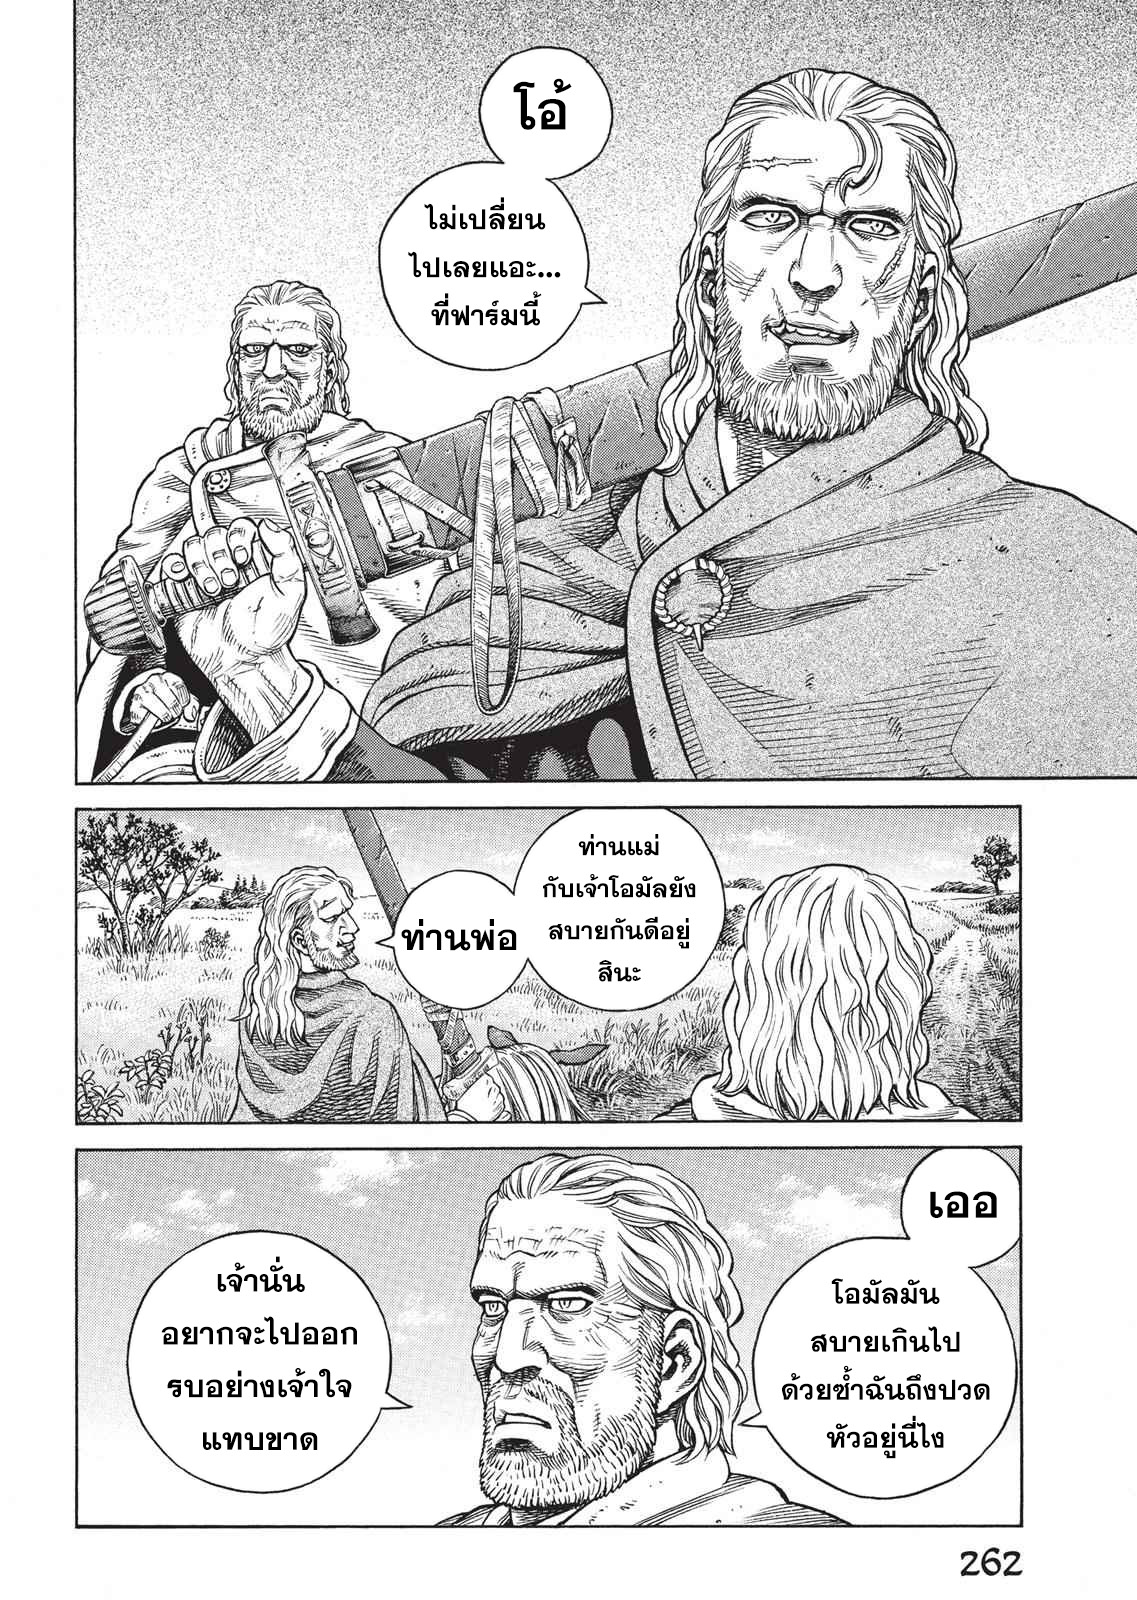 Vinland Saga 66 (18)